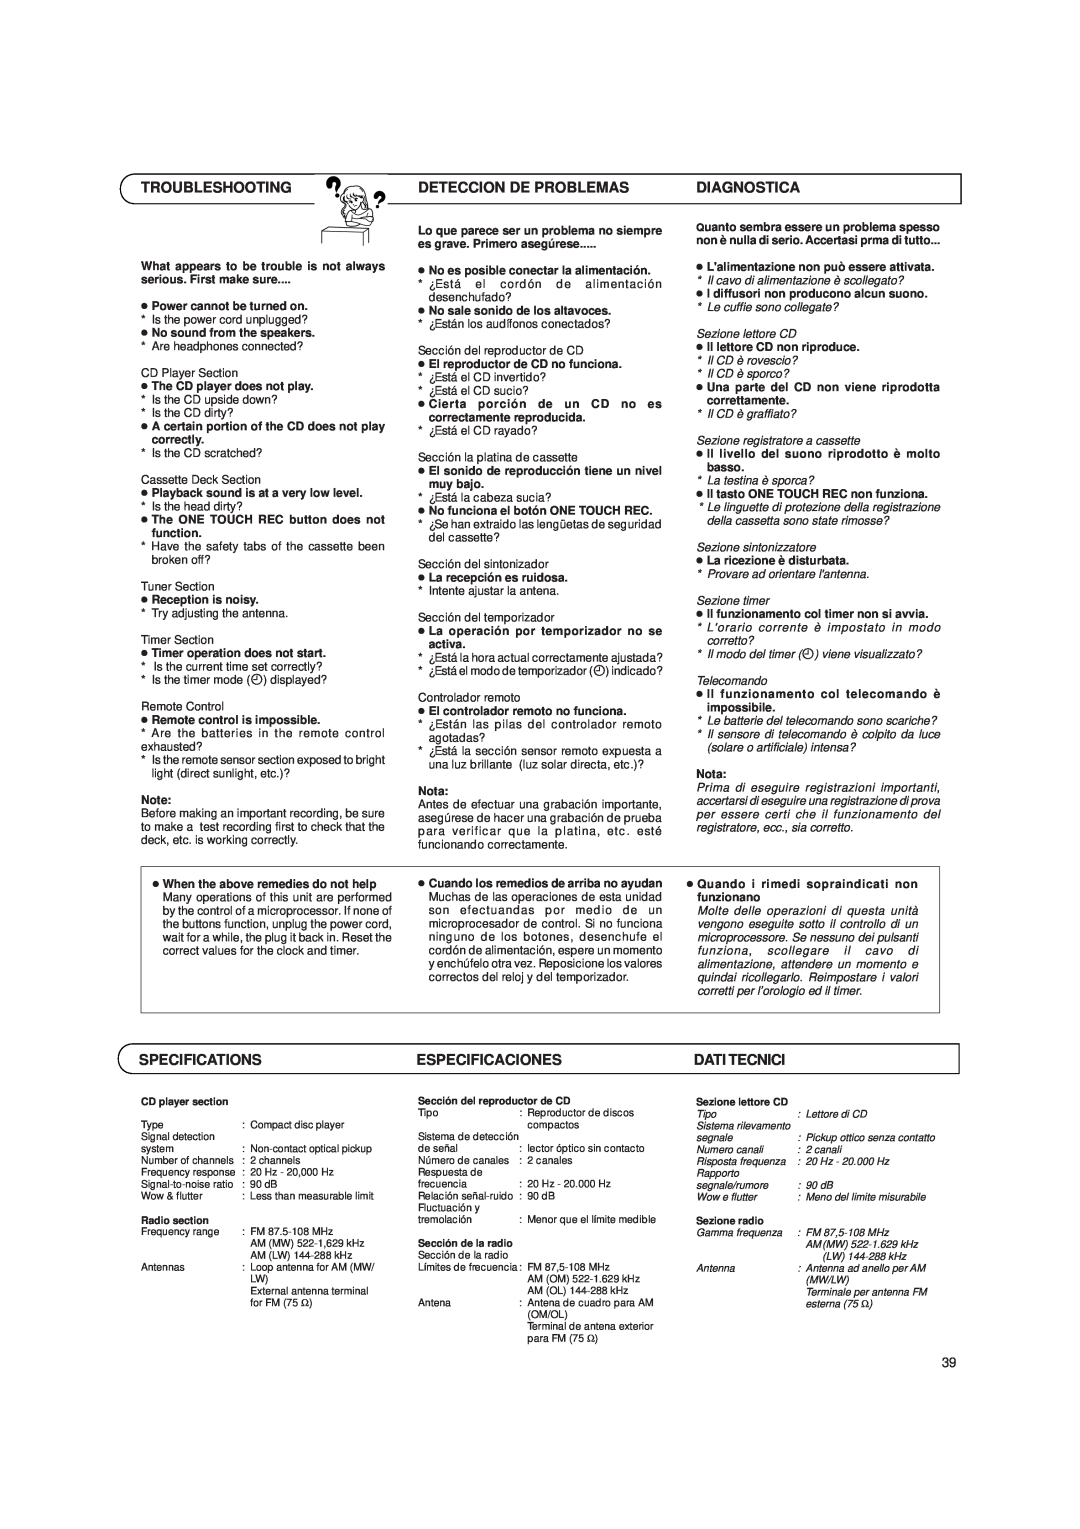 JVC UX-T250R manual Troubleshooting, Deteccion De Problemas, Diagnostica, Specifications, Especificaciones, Dati Tecnici 